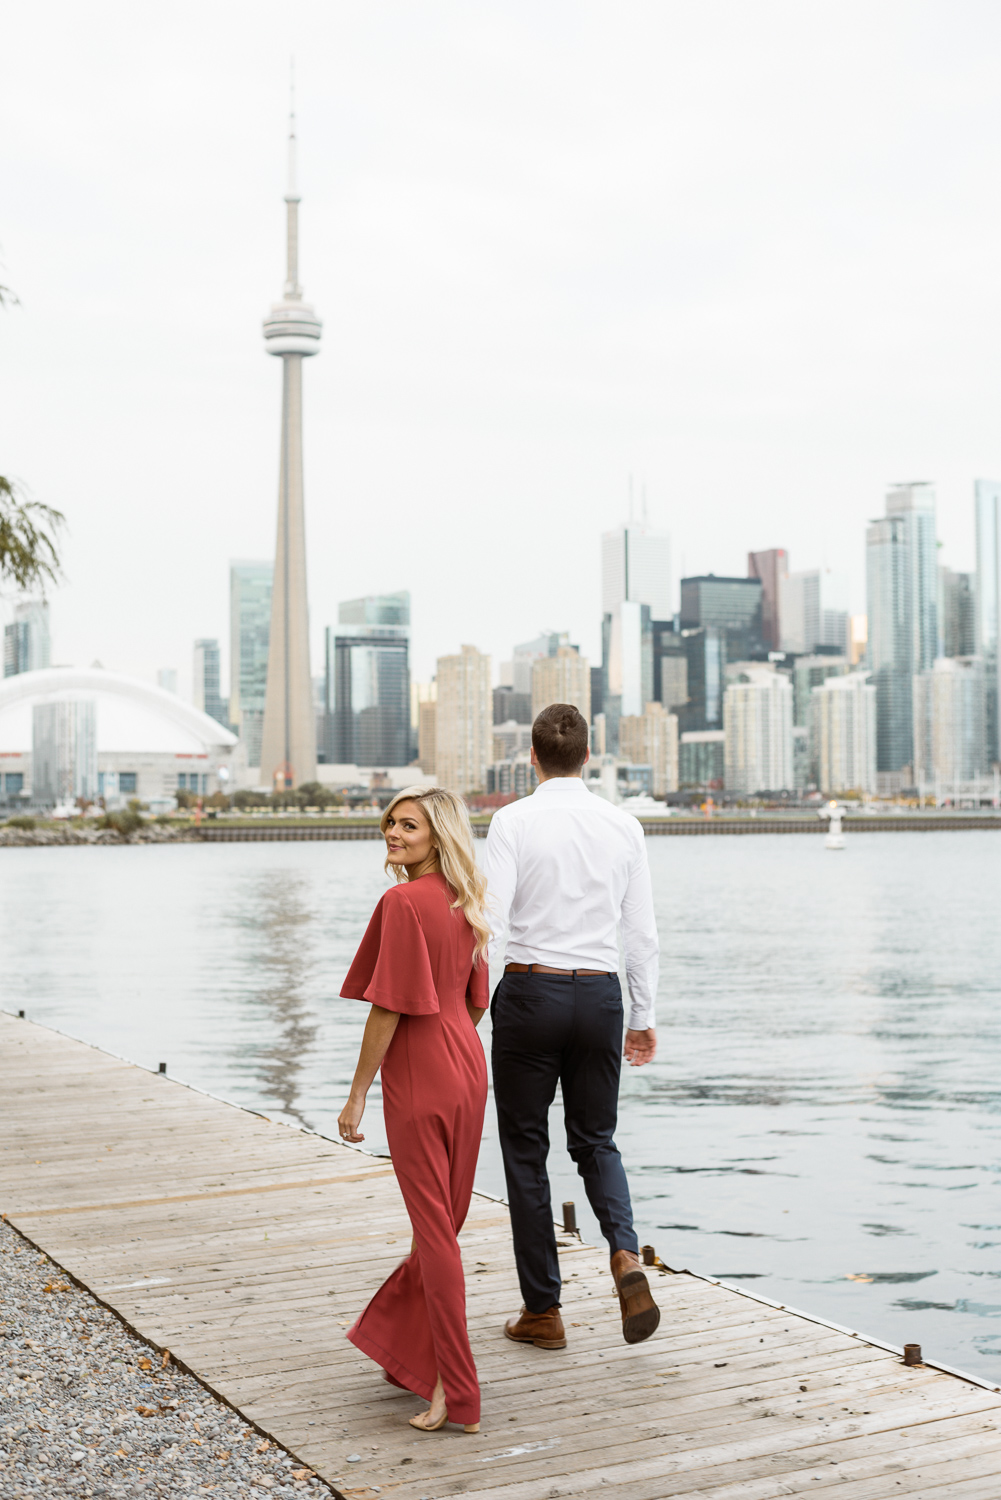 Engagement photo with Toronto skyline